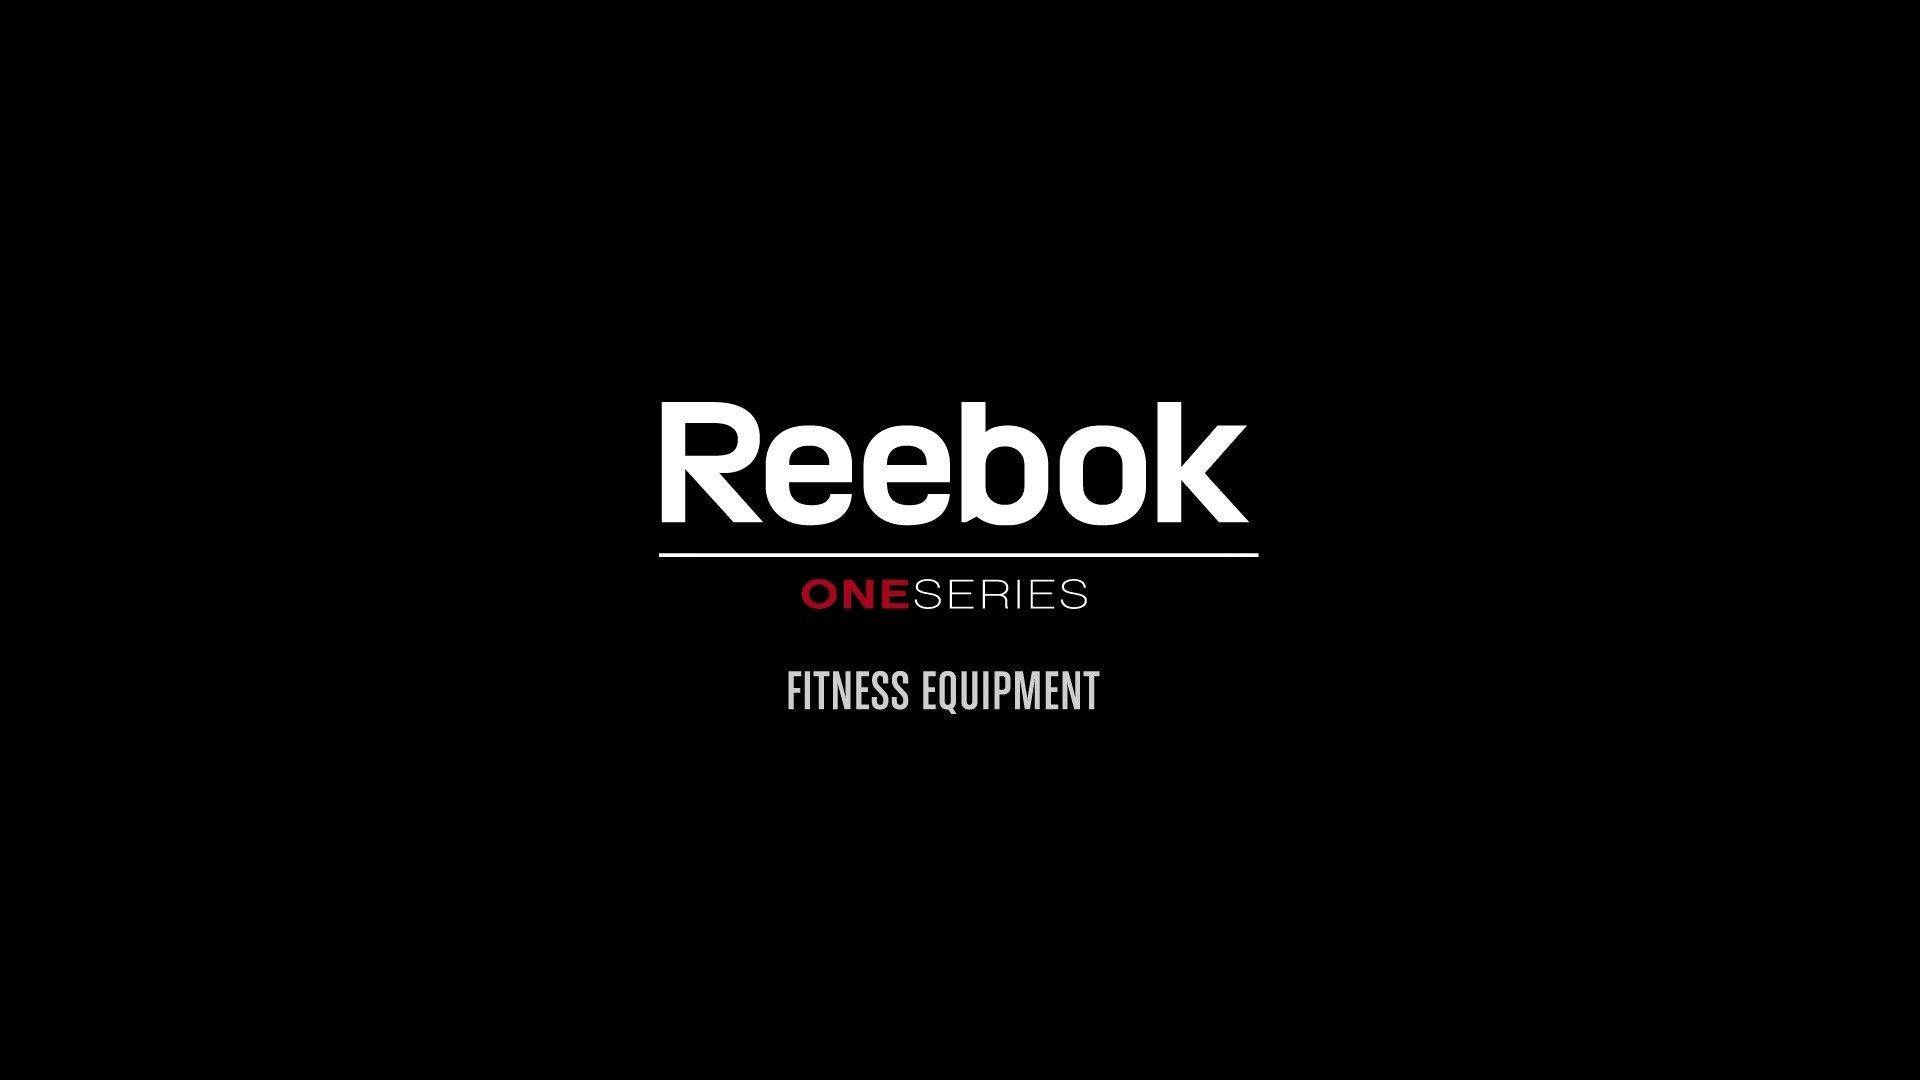 Reebok One Series Black Background